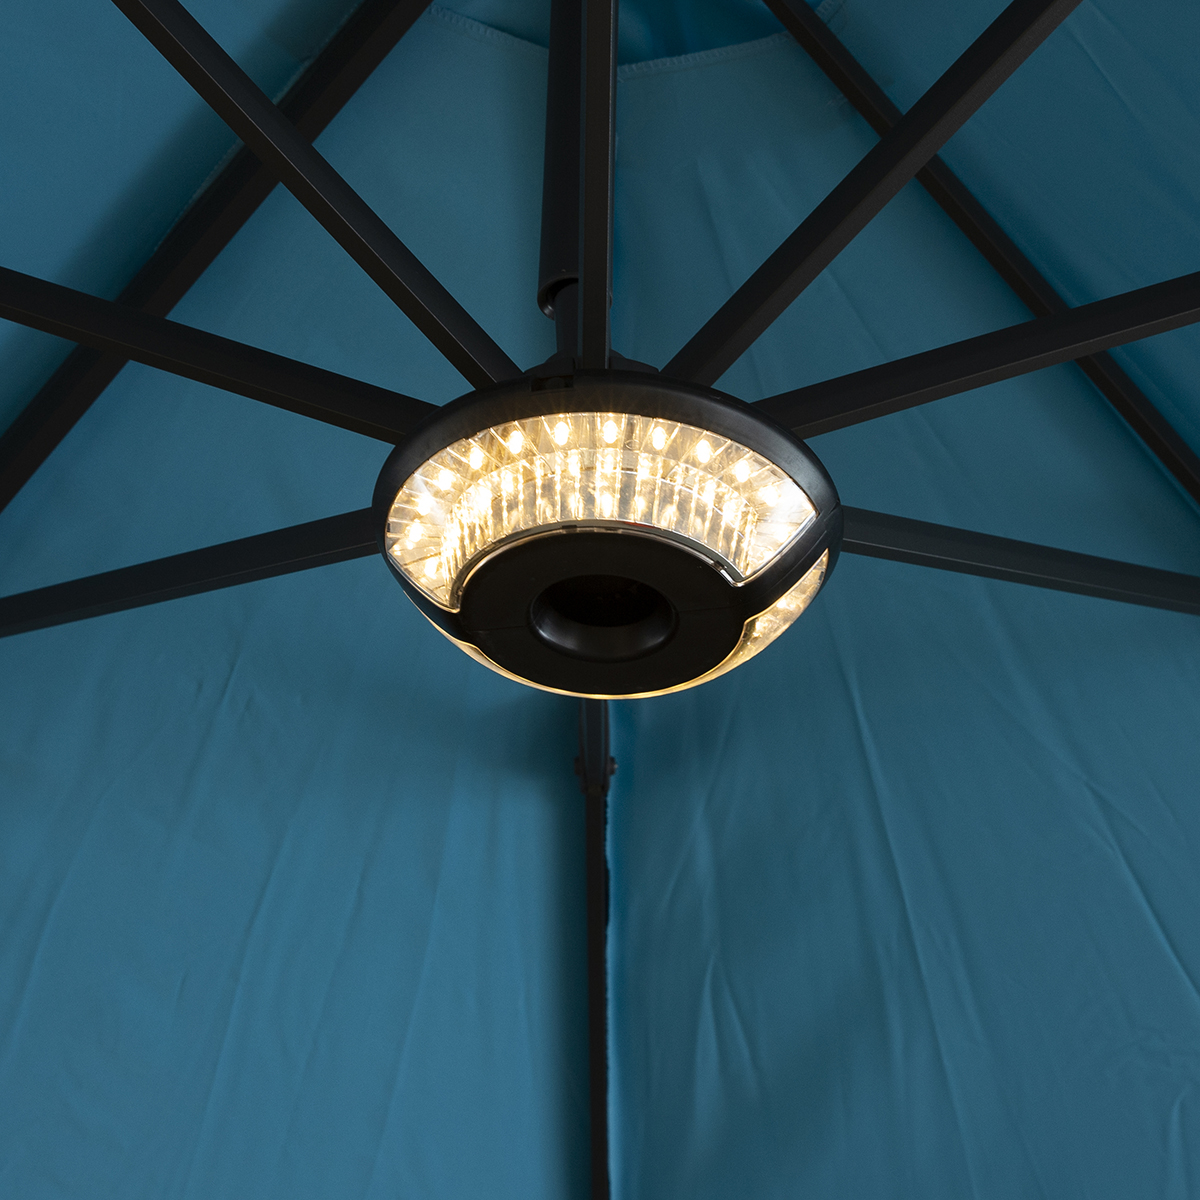 patio Umbrella Lights